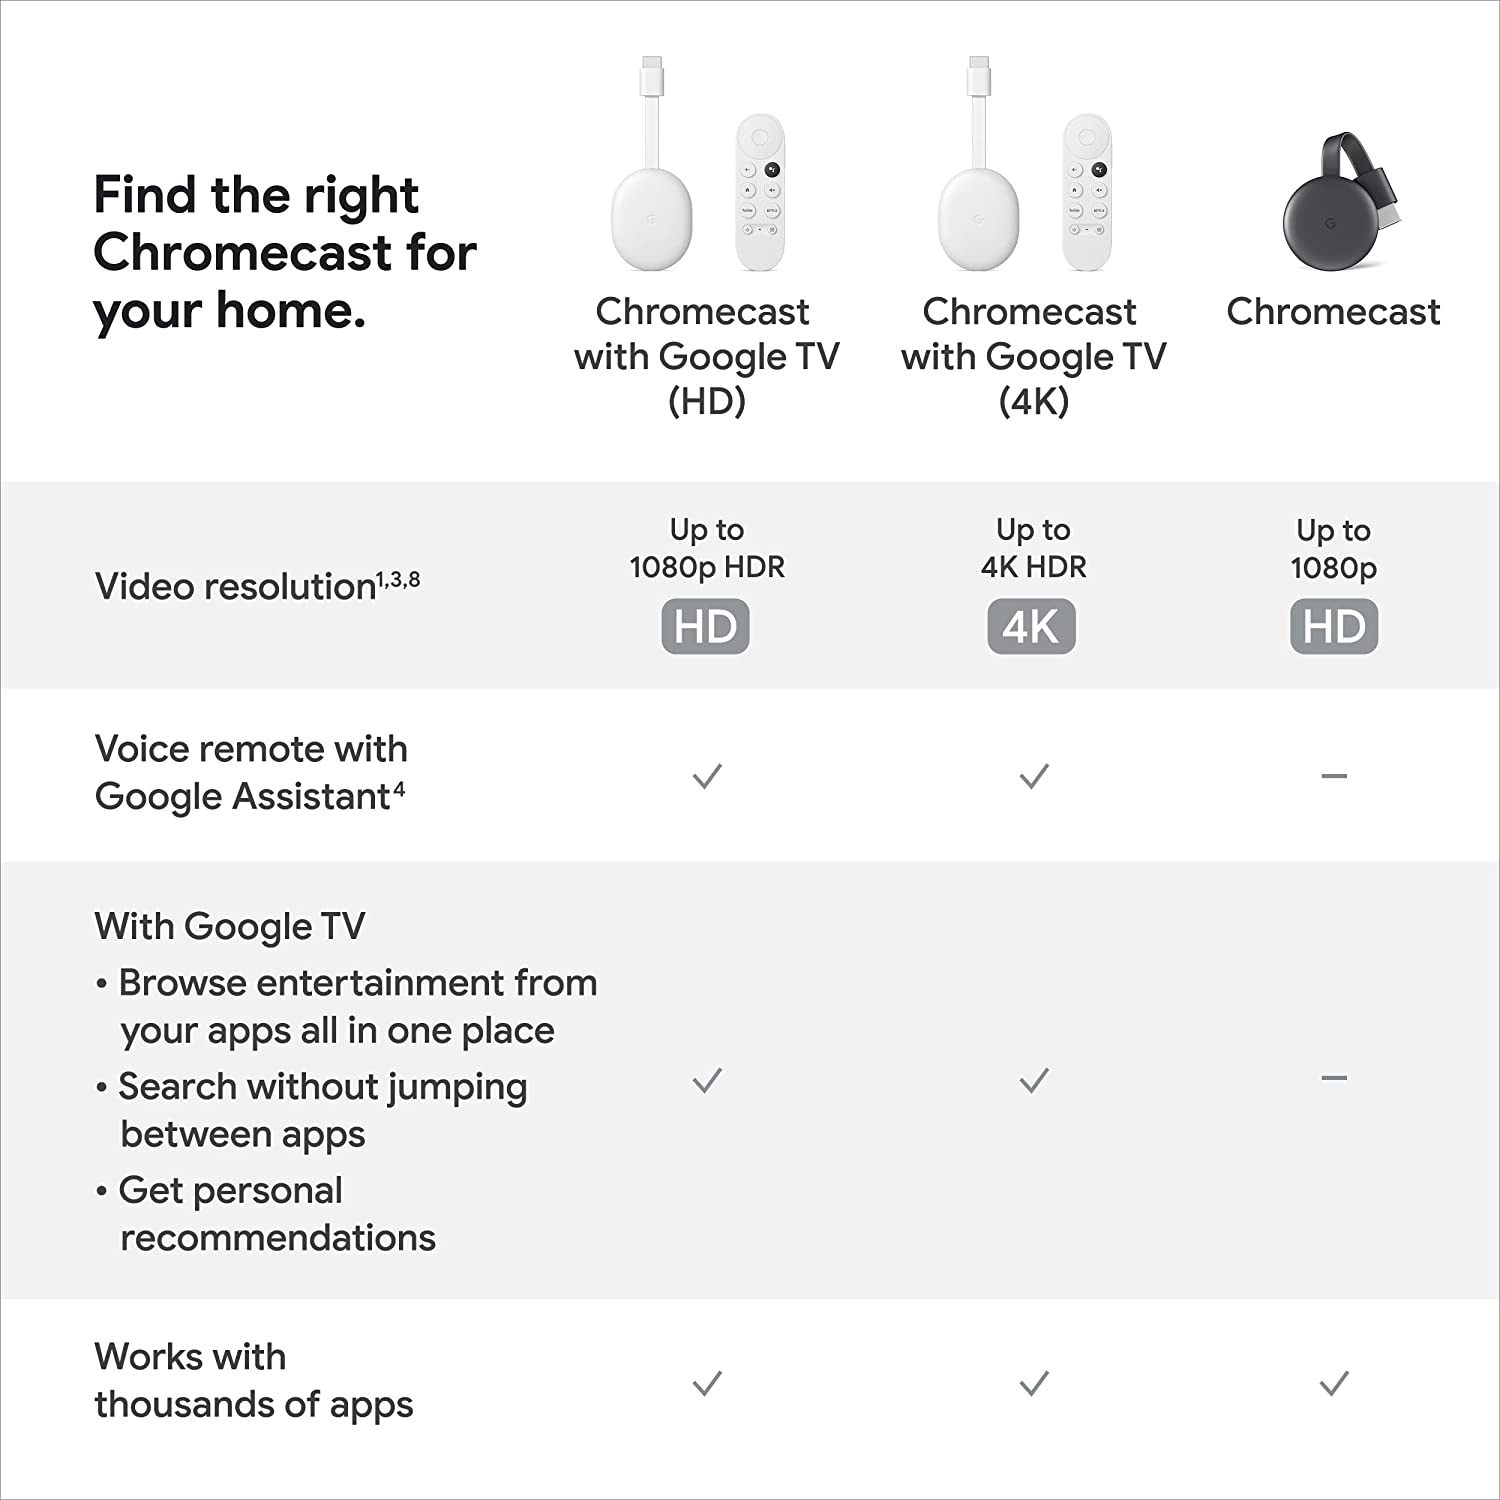 Google Chromecast with Google TV (HD) vs. Chromecast with Google